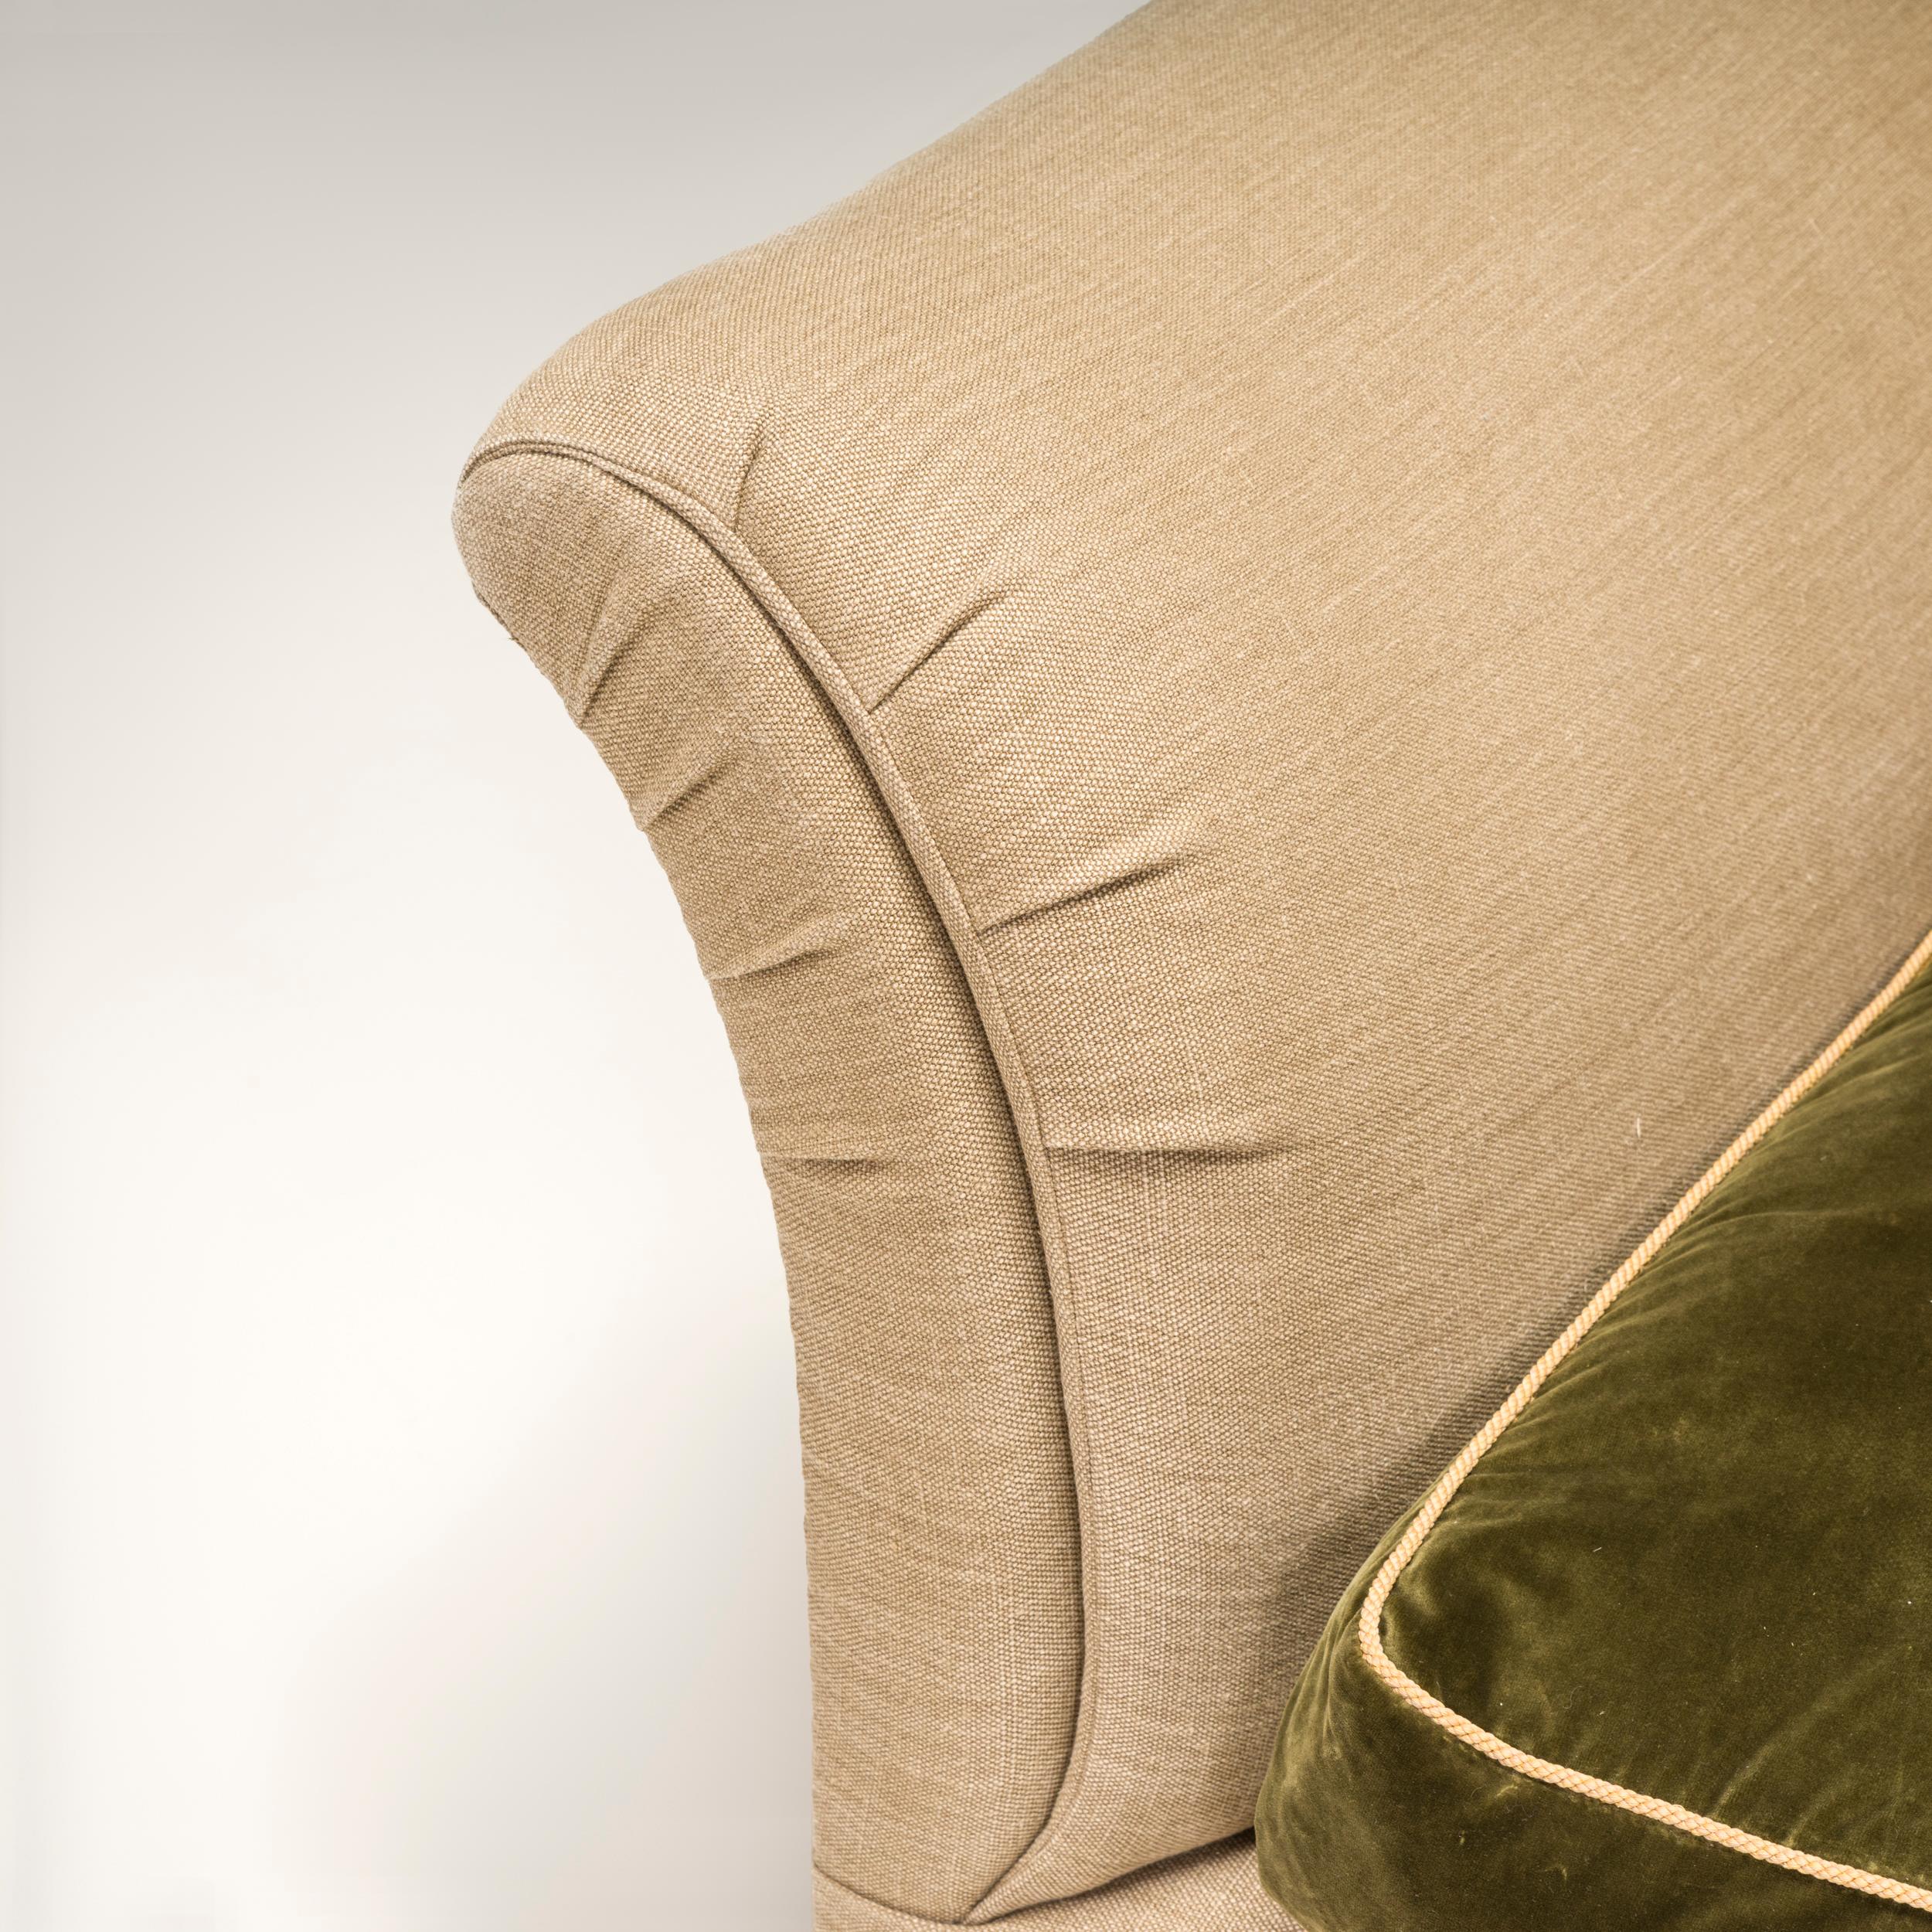  British Victorian Max Rollitt Dean Green Velvet and Beige Fabric Sofa For Sale 4